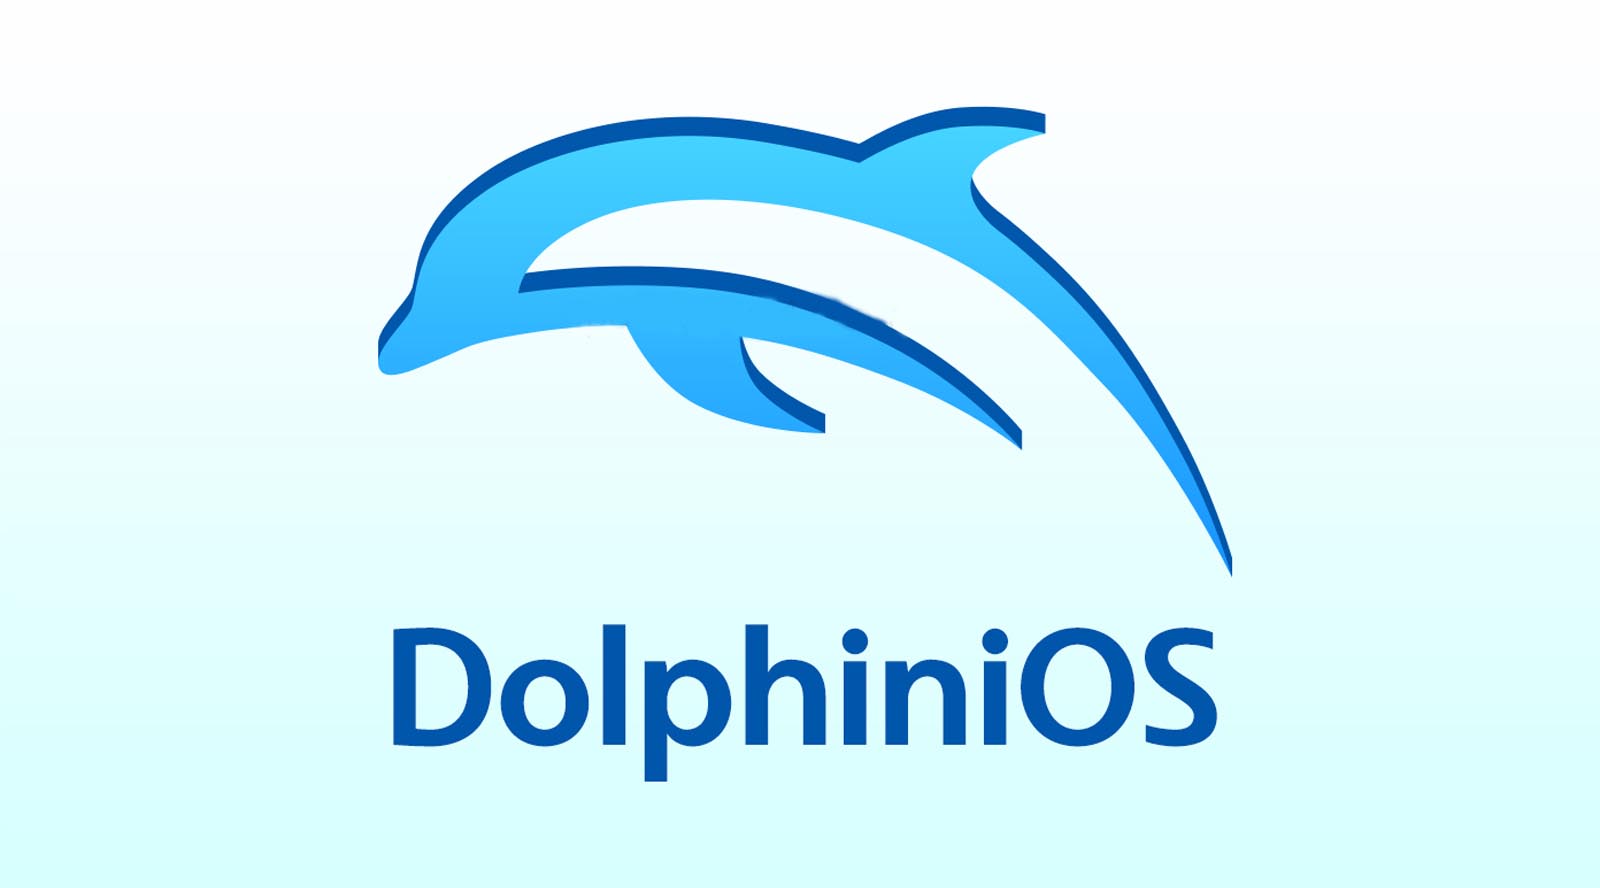 dolphin emulator mac reviews